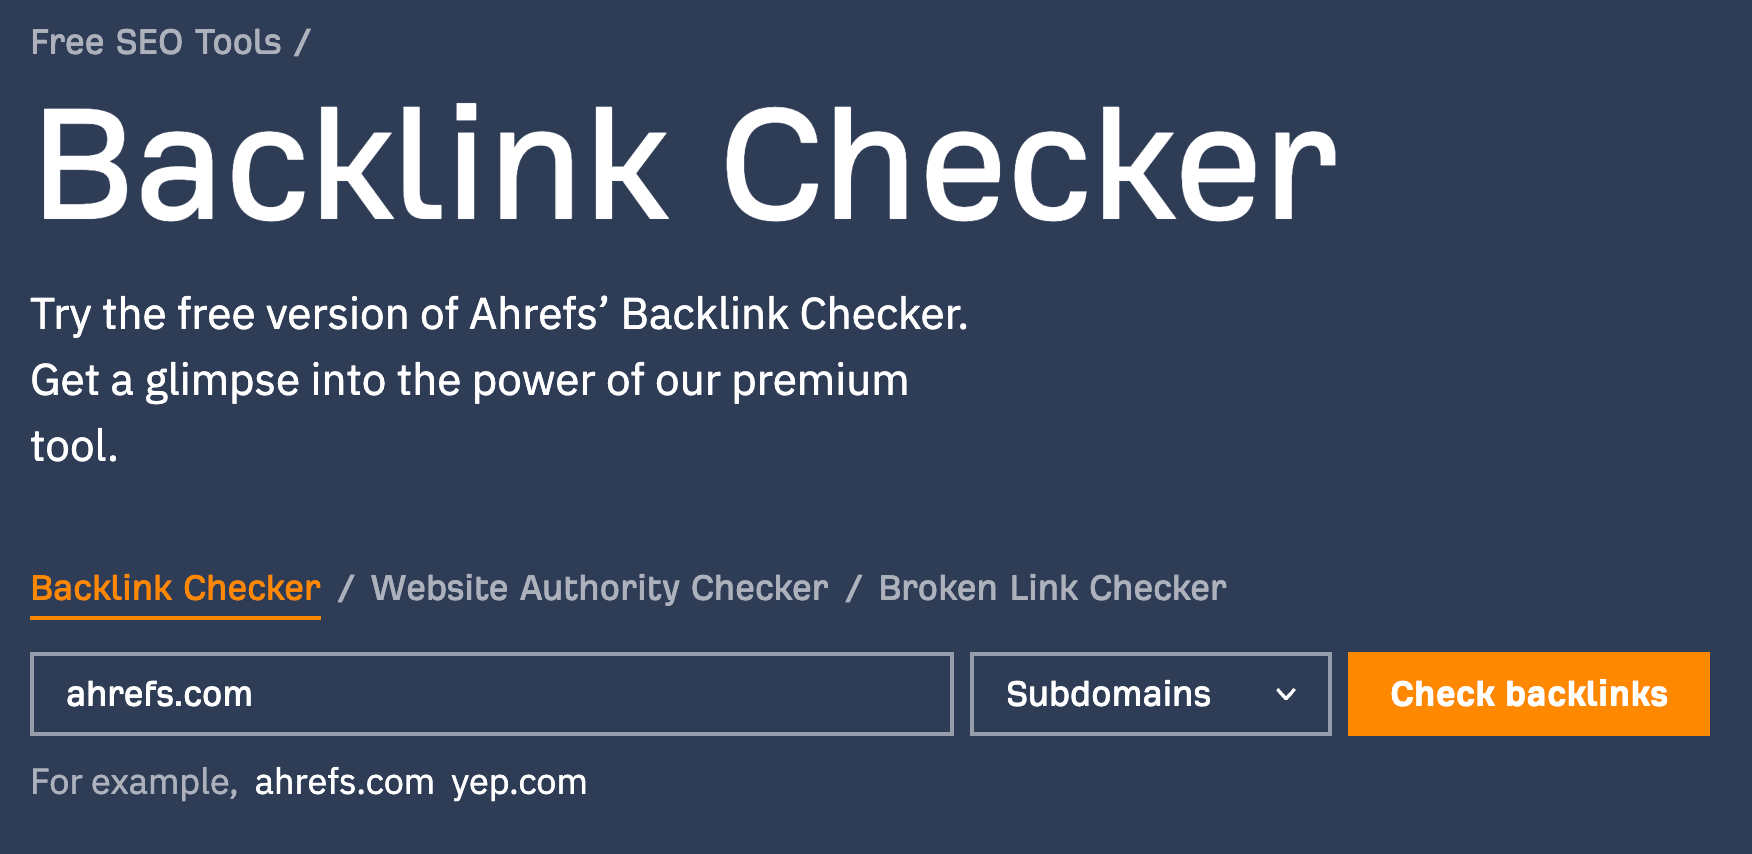 Ahrefs' free backlink checker